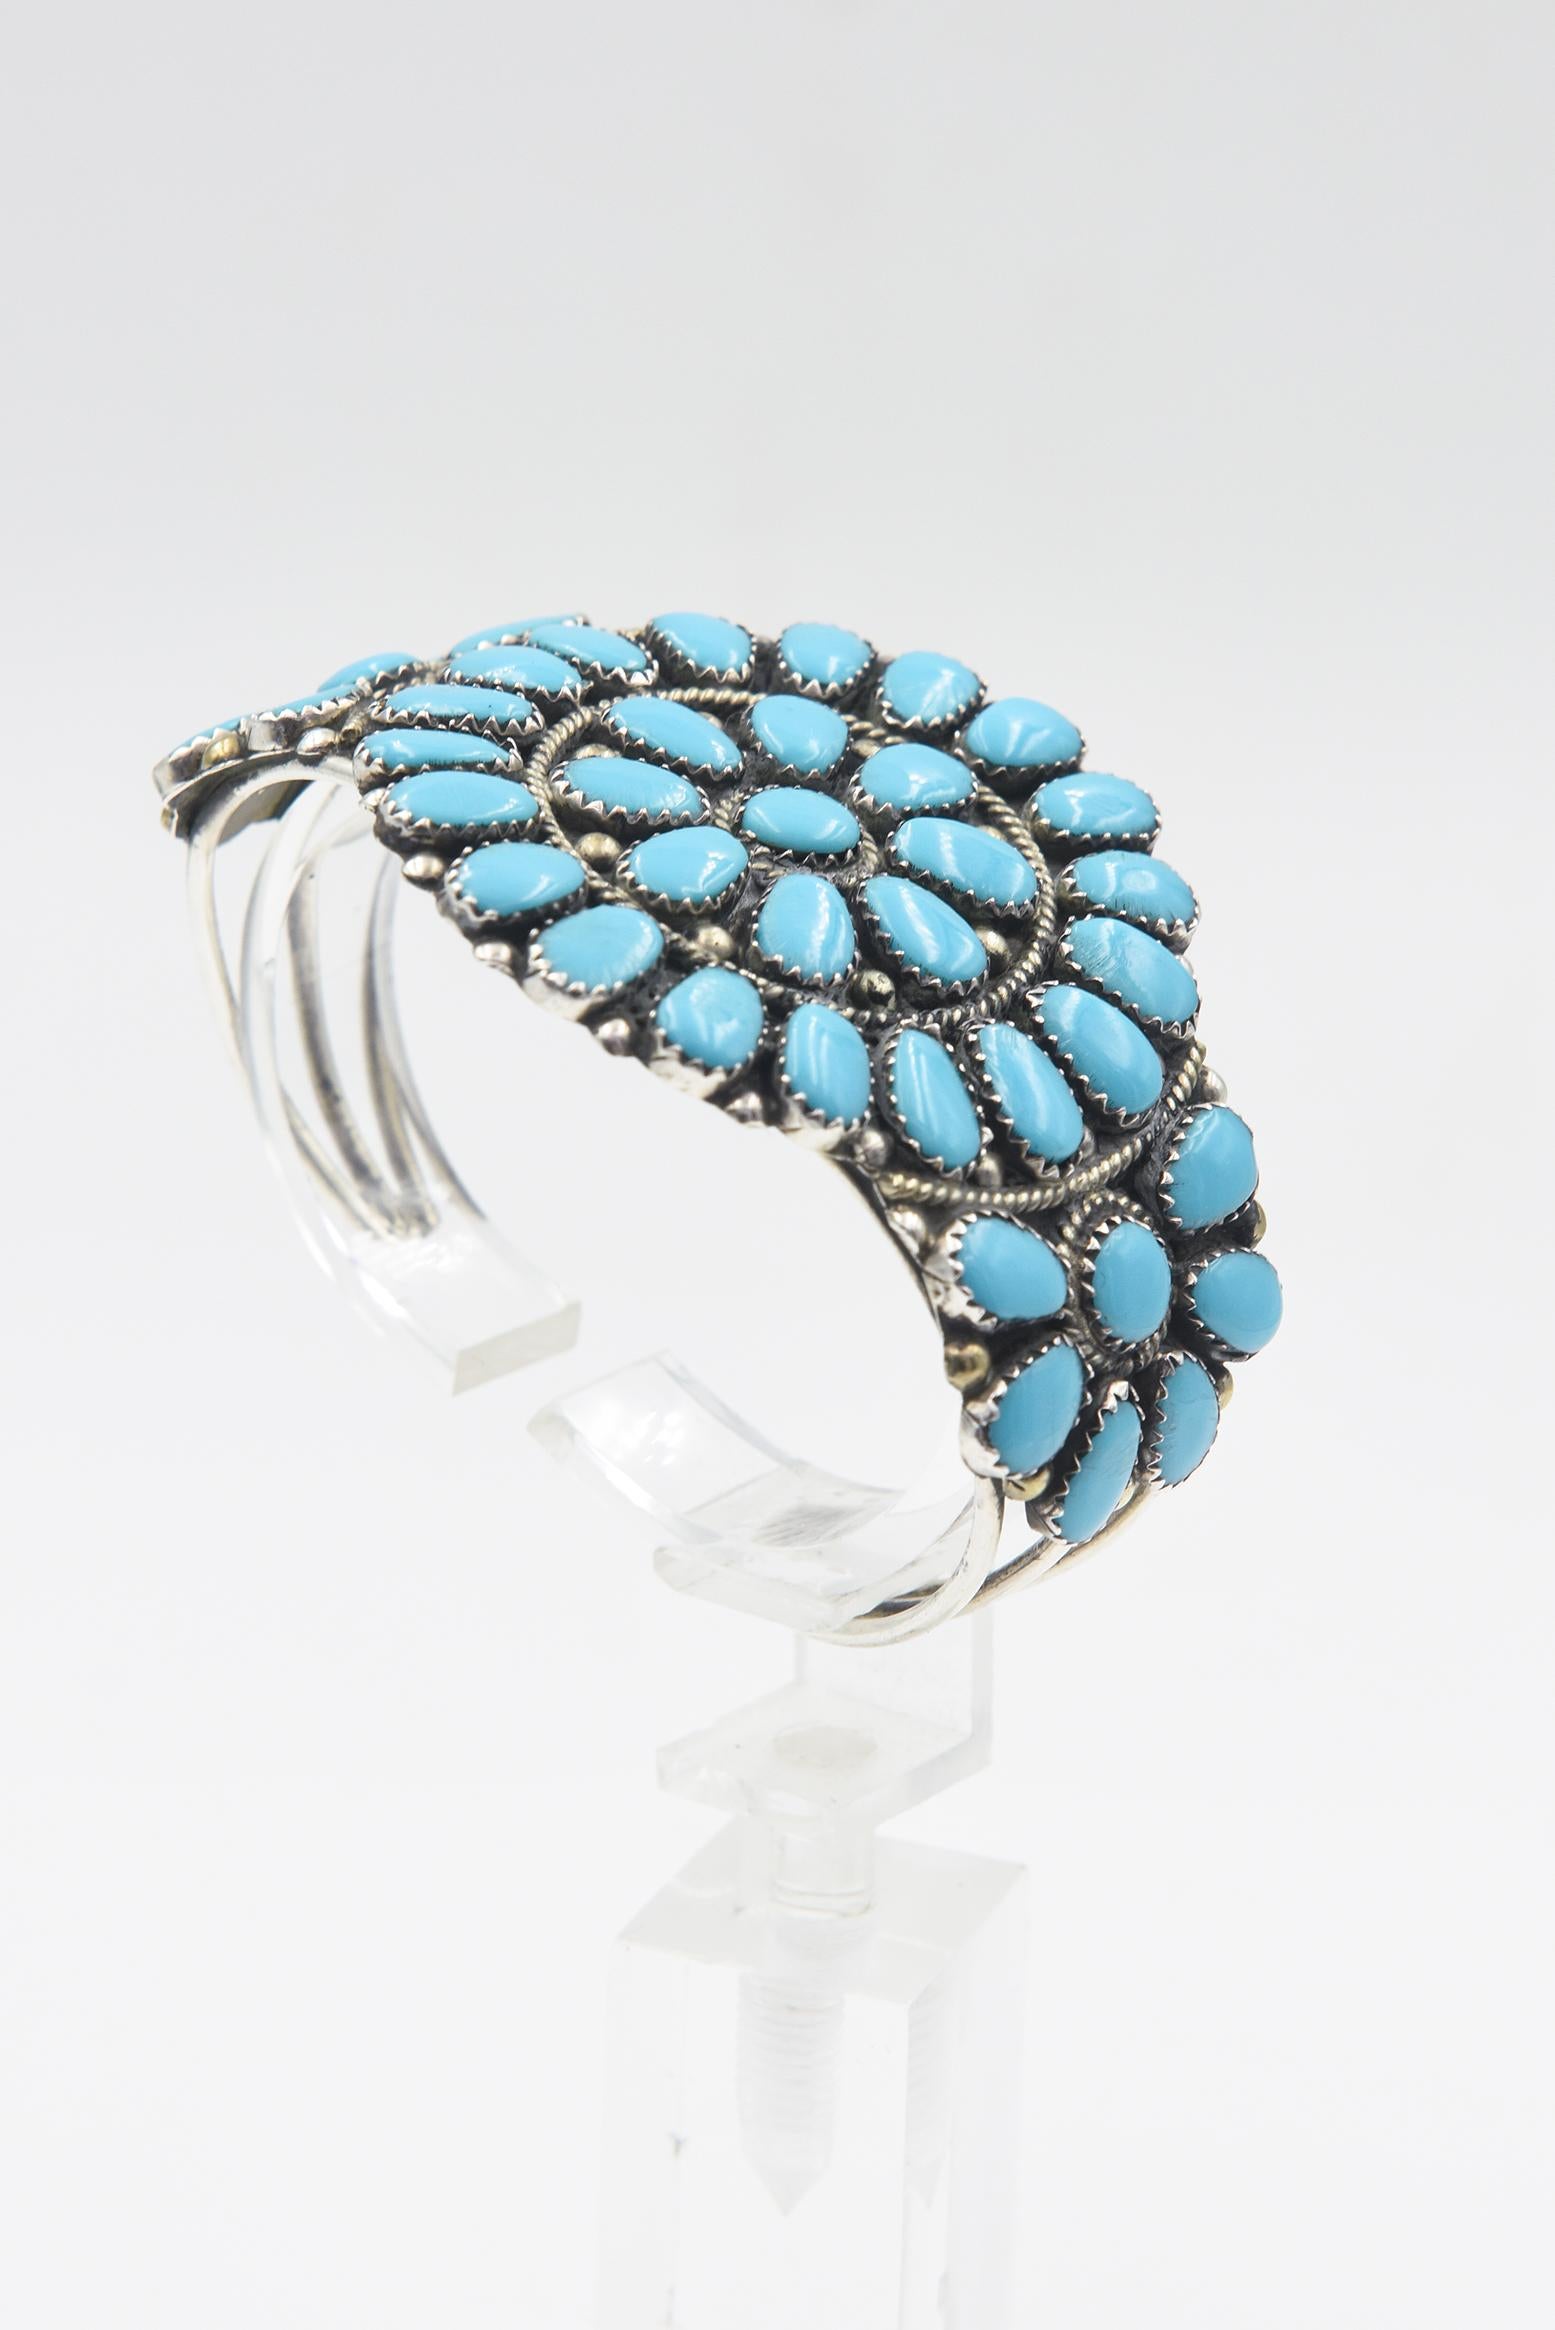 Navajo Juliana Williams Turquoise Sun Wheel Sterling Silver Cuff Bracelet  For Sale 2